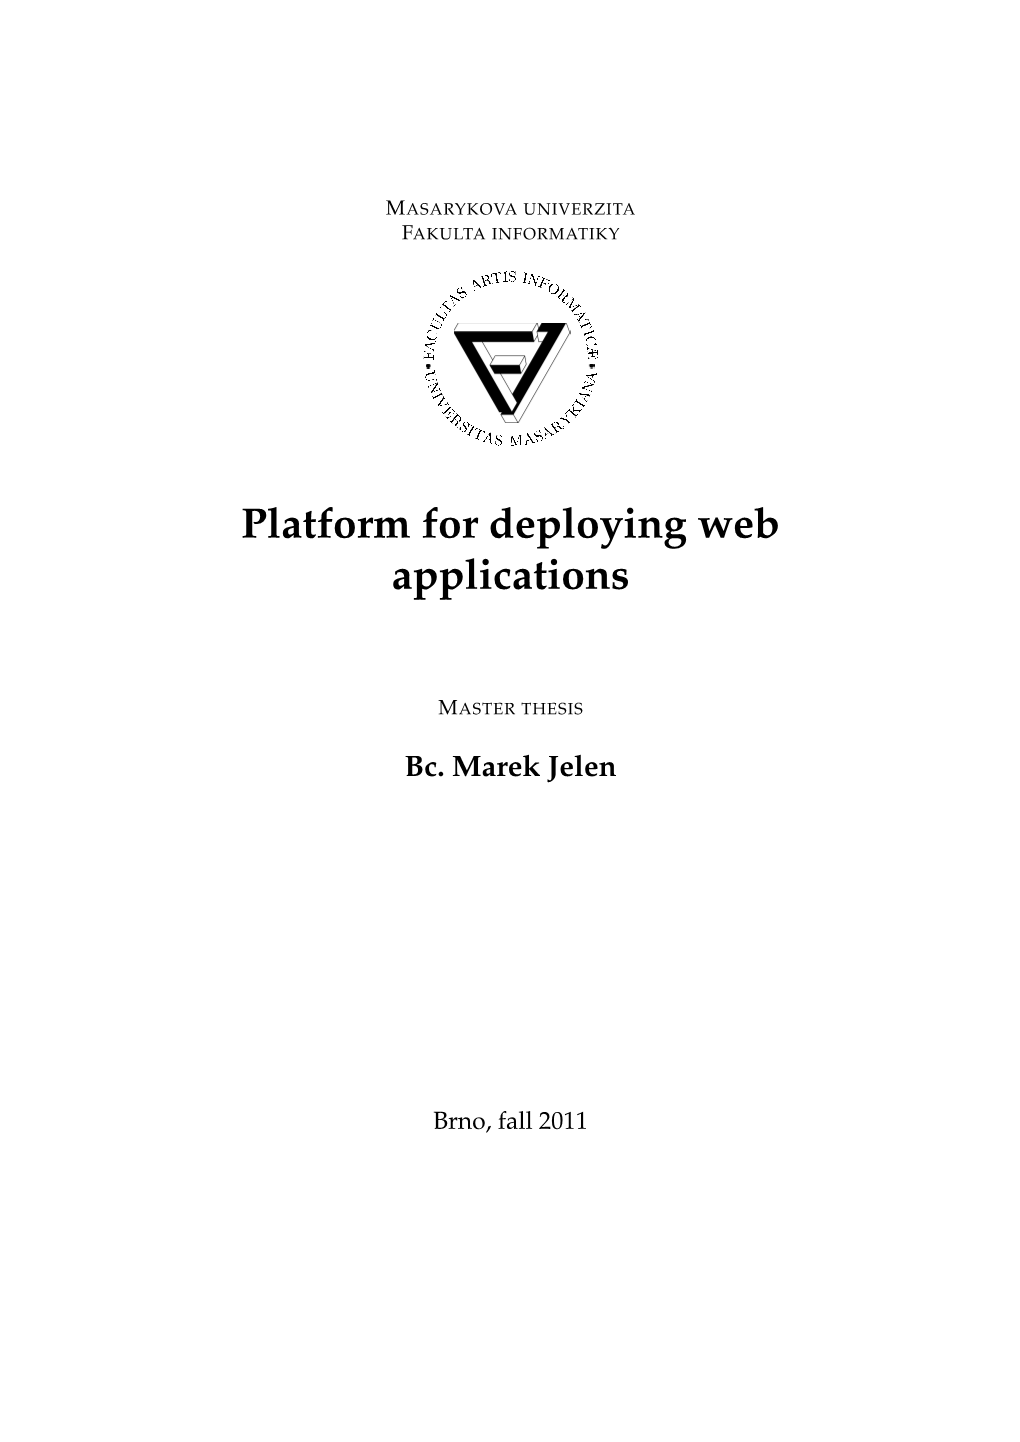 Platform for Deploying Web Applications